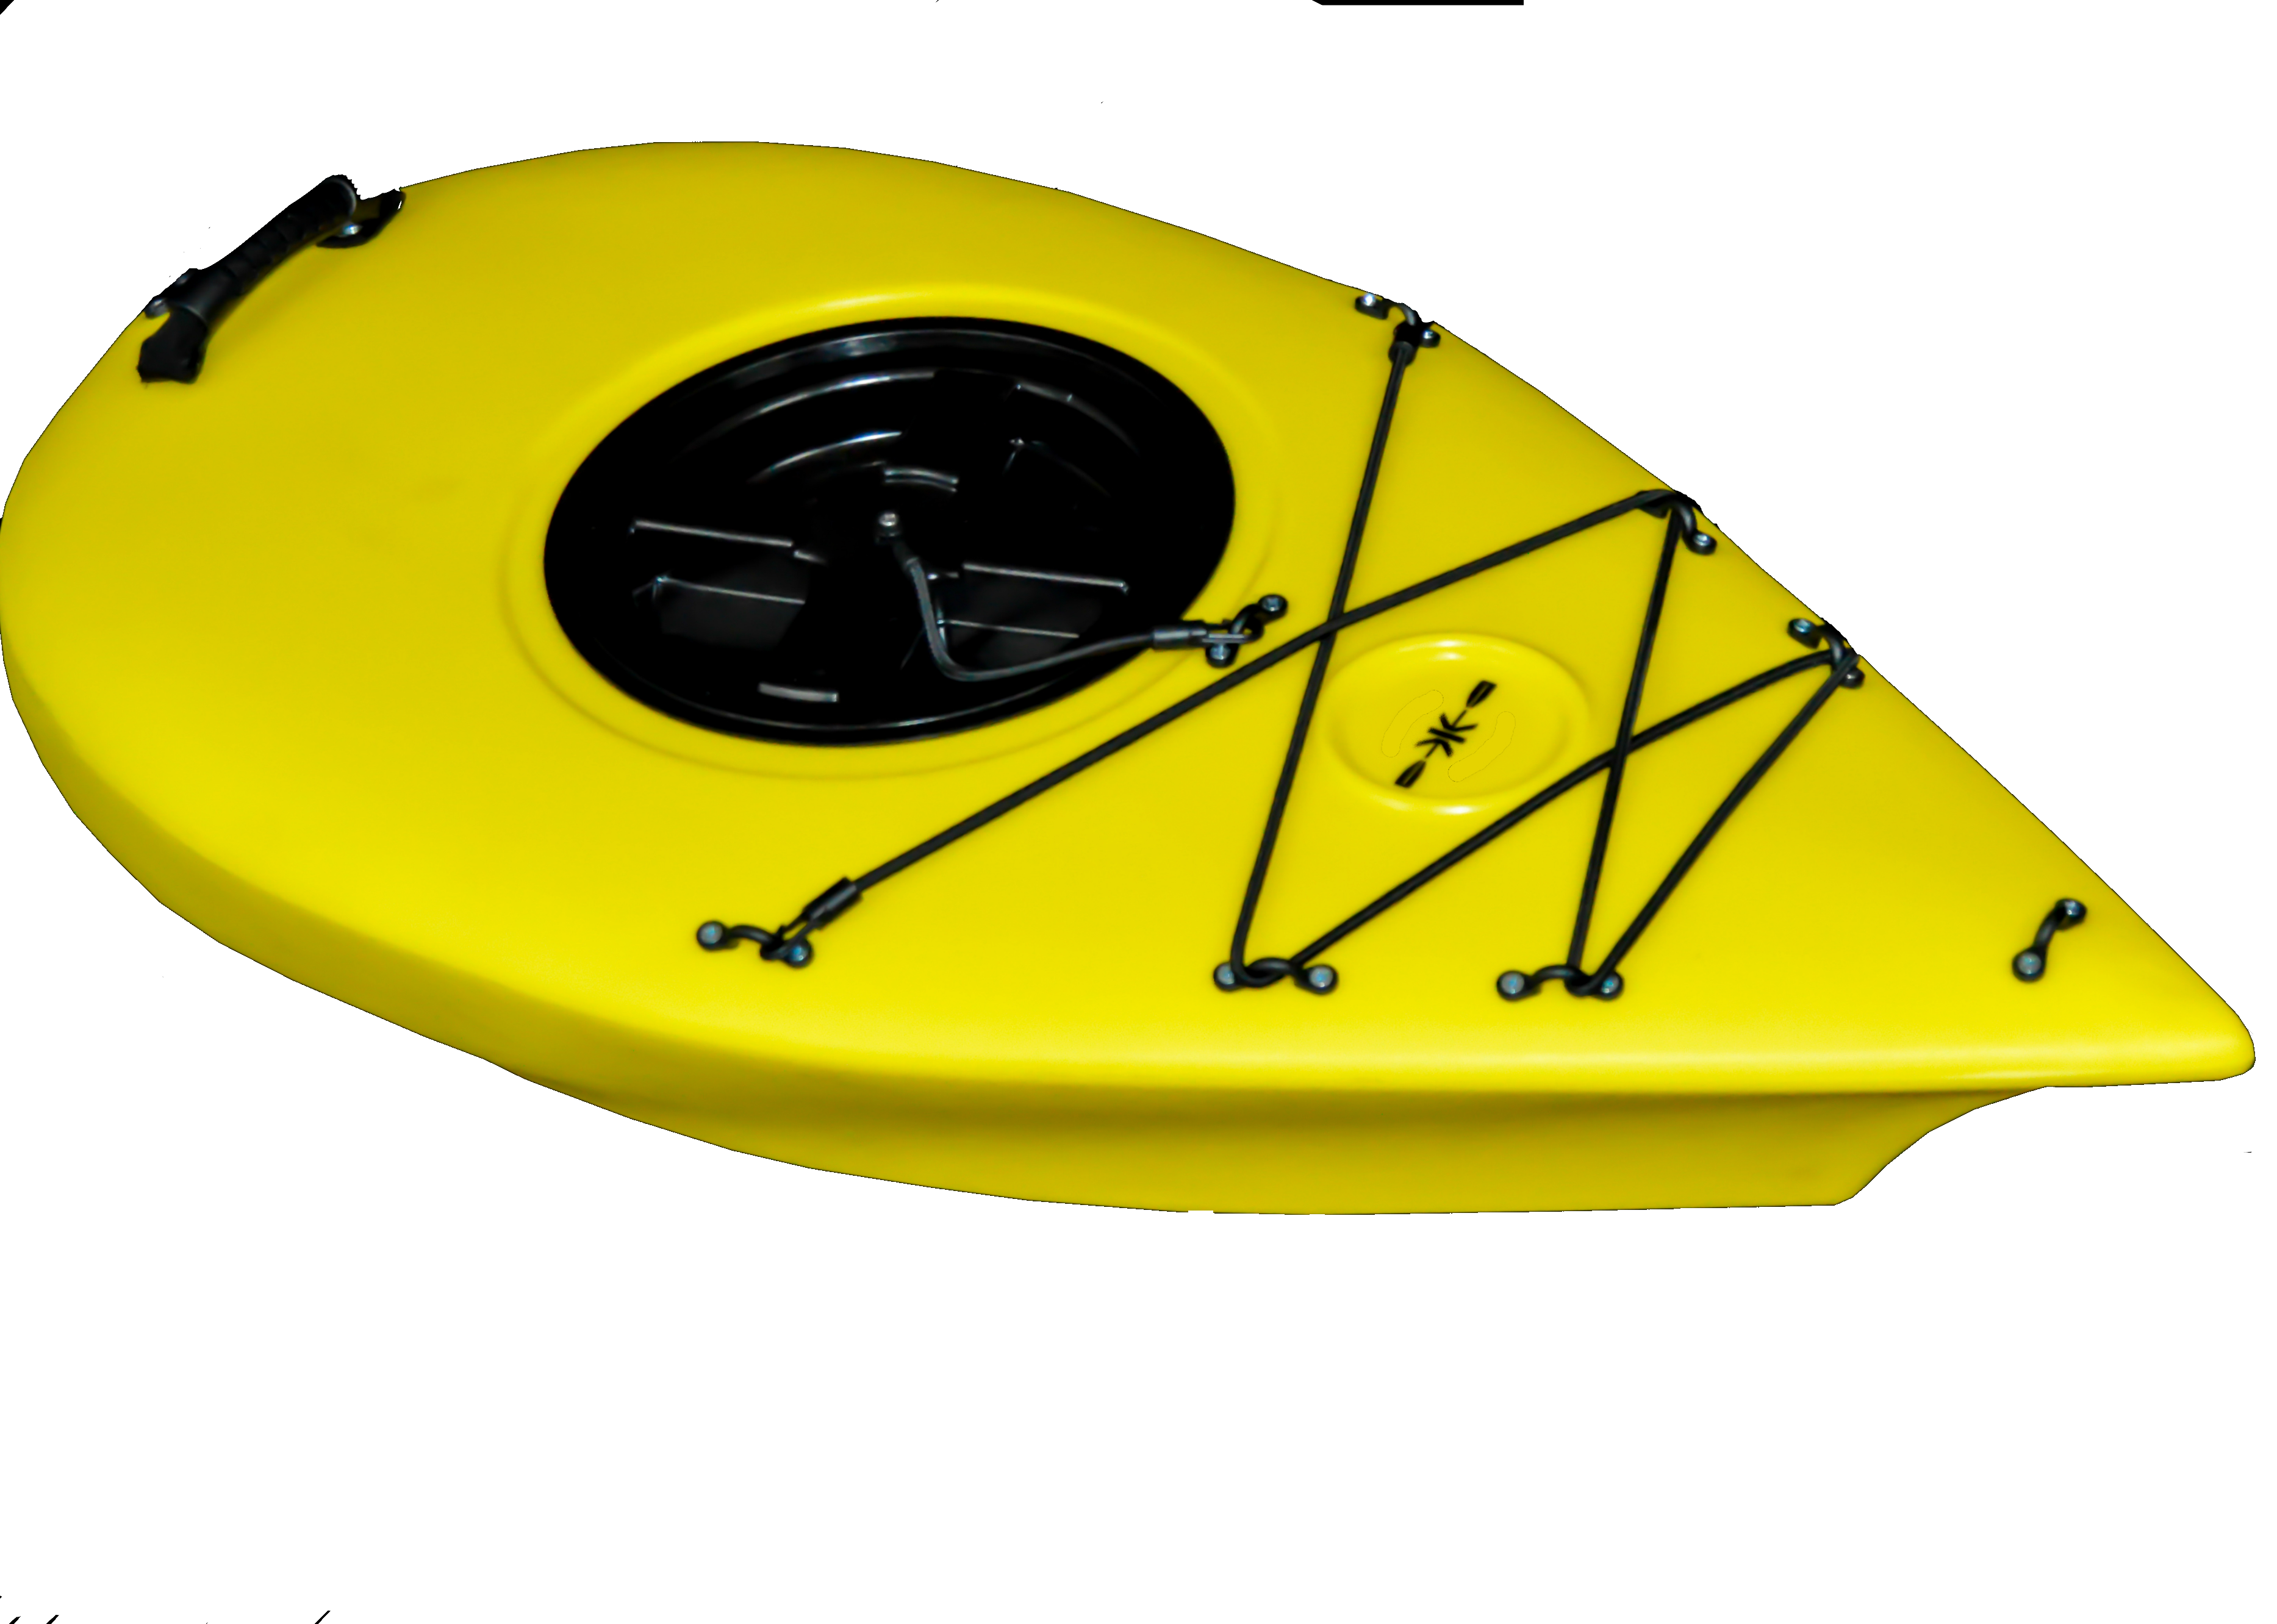 Kayaking clipart yellow boat. Hydrokaddy